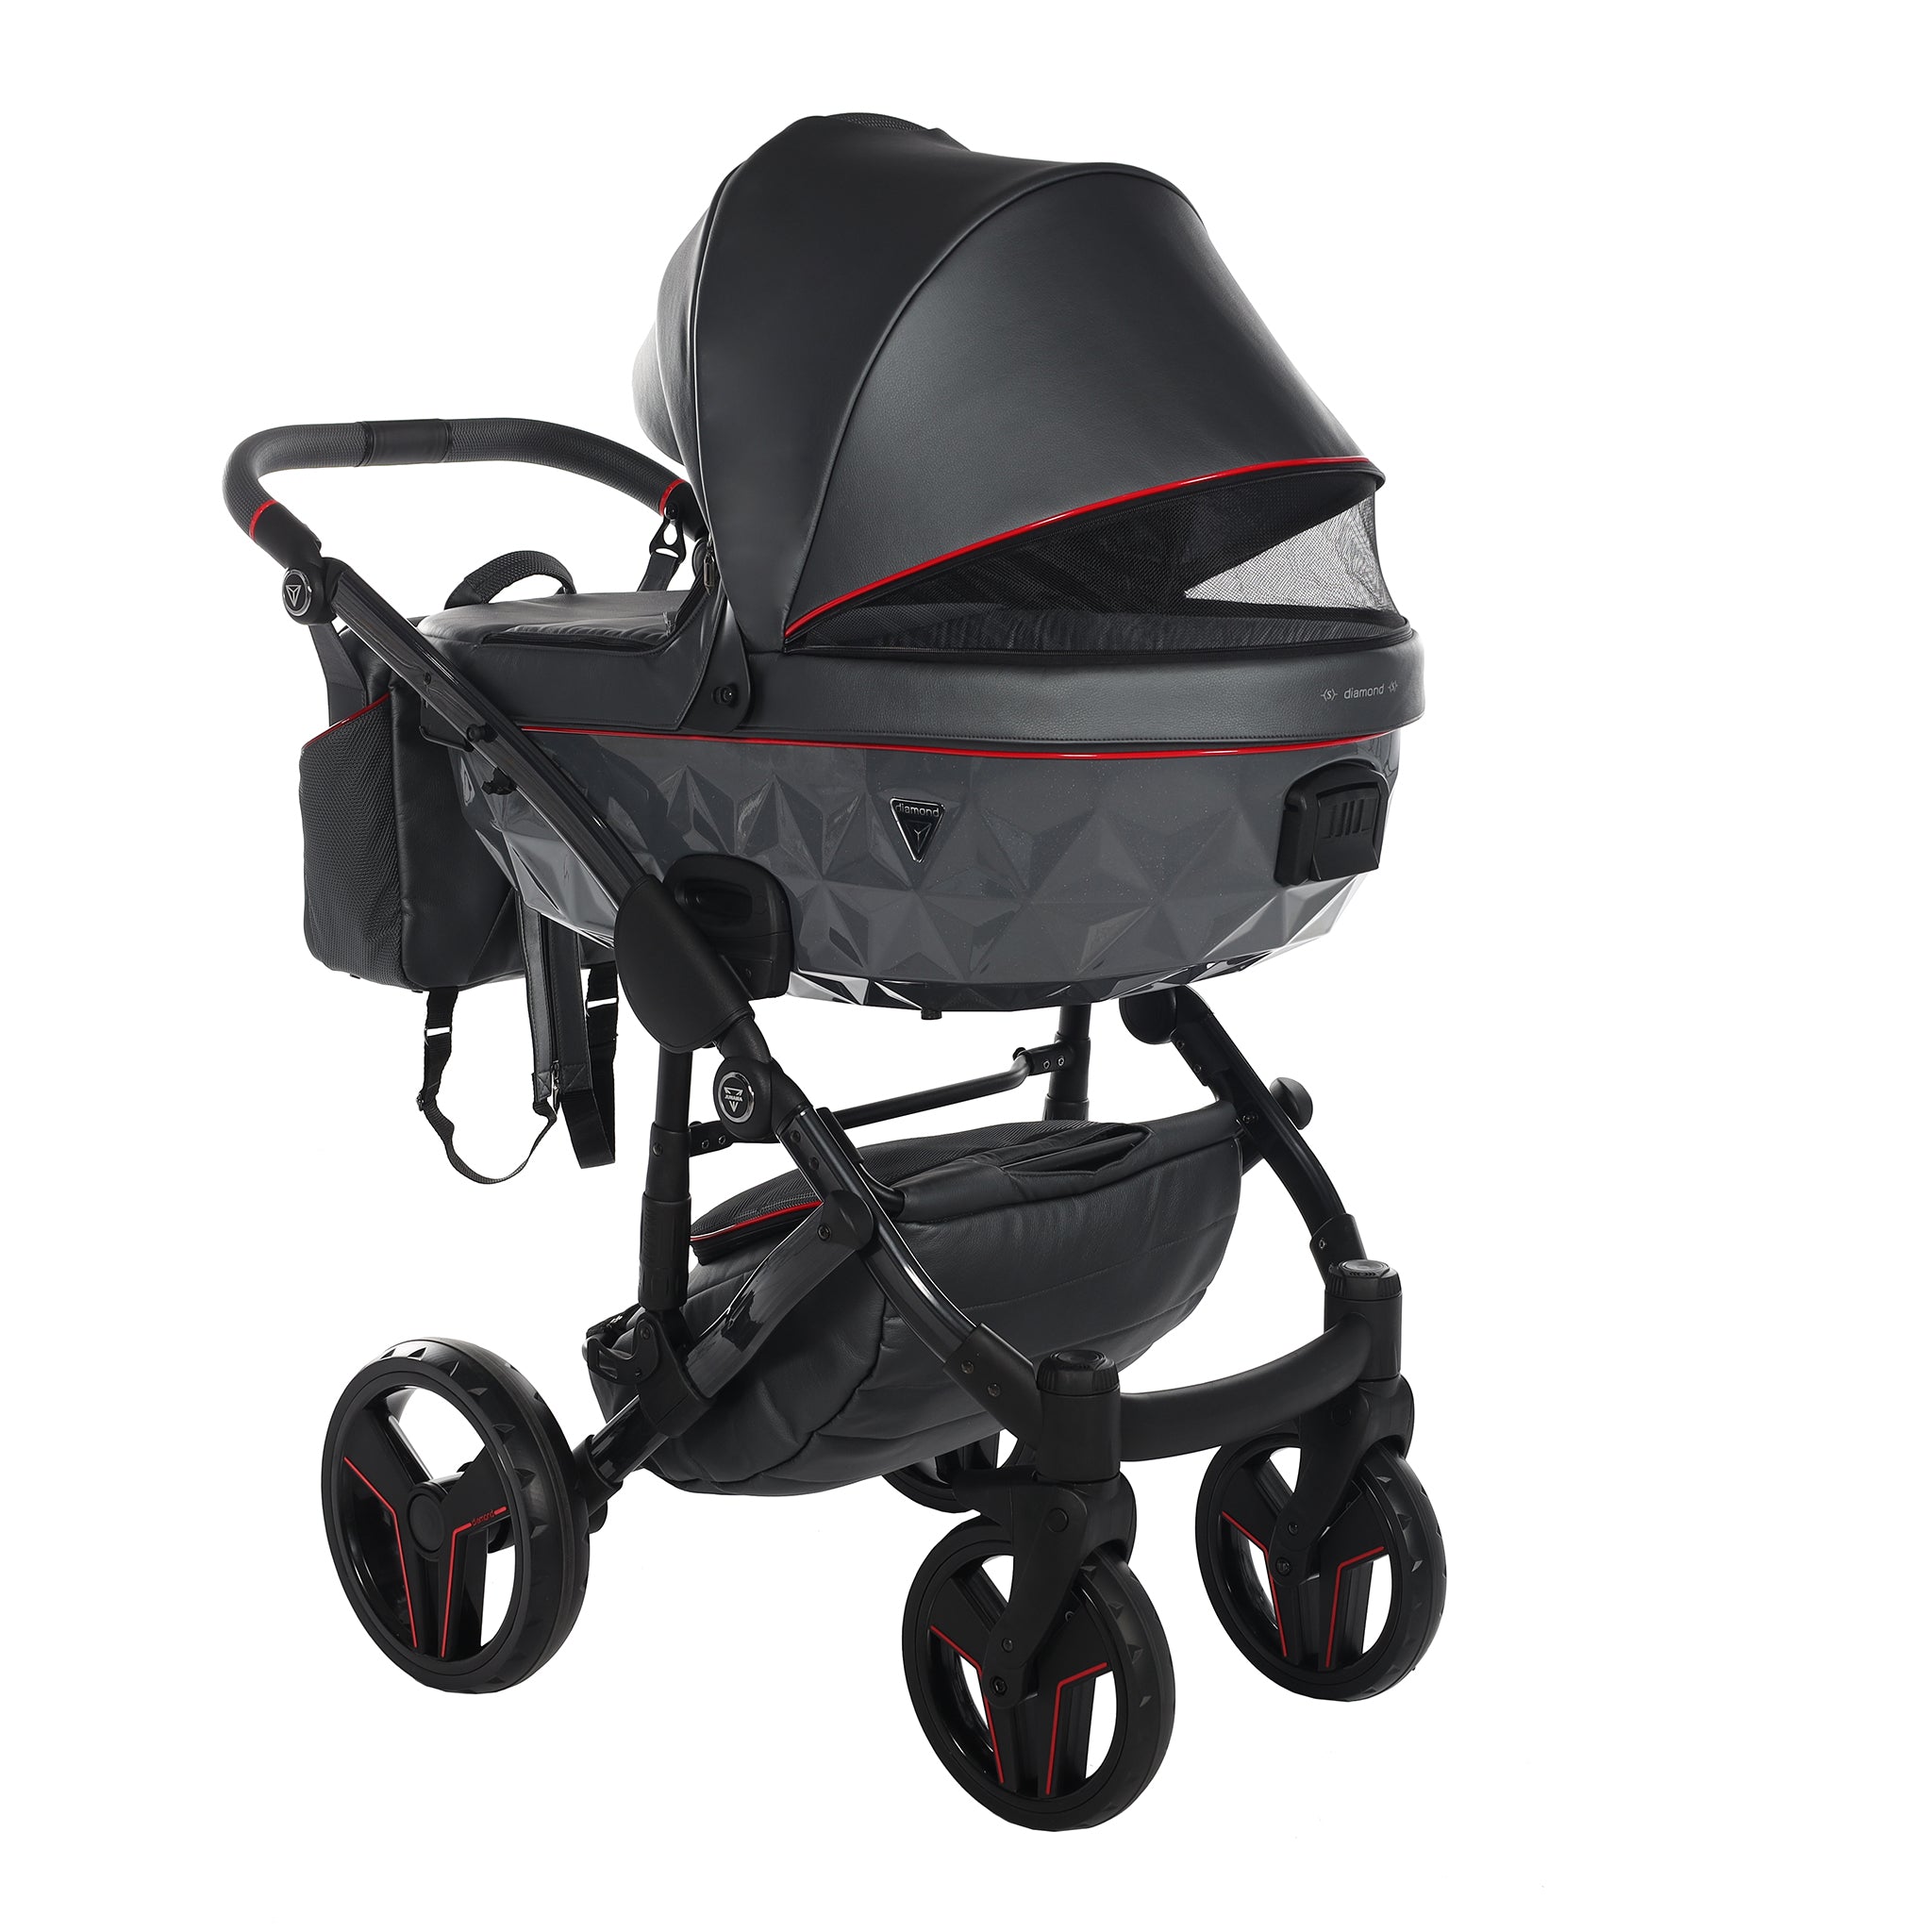 Junama S Class, baby prams or stroller 2 in 1 - Dark Gray and Black, Code number: JUNSC06